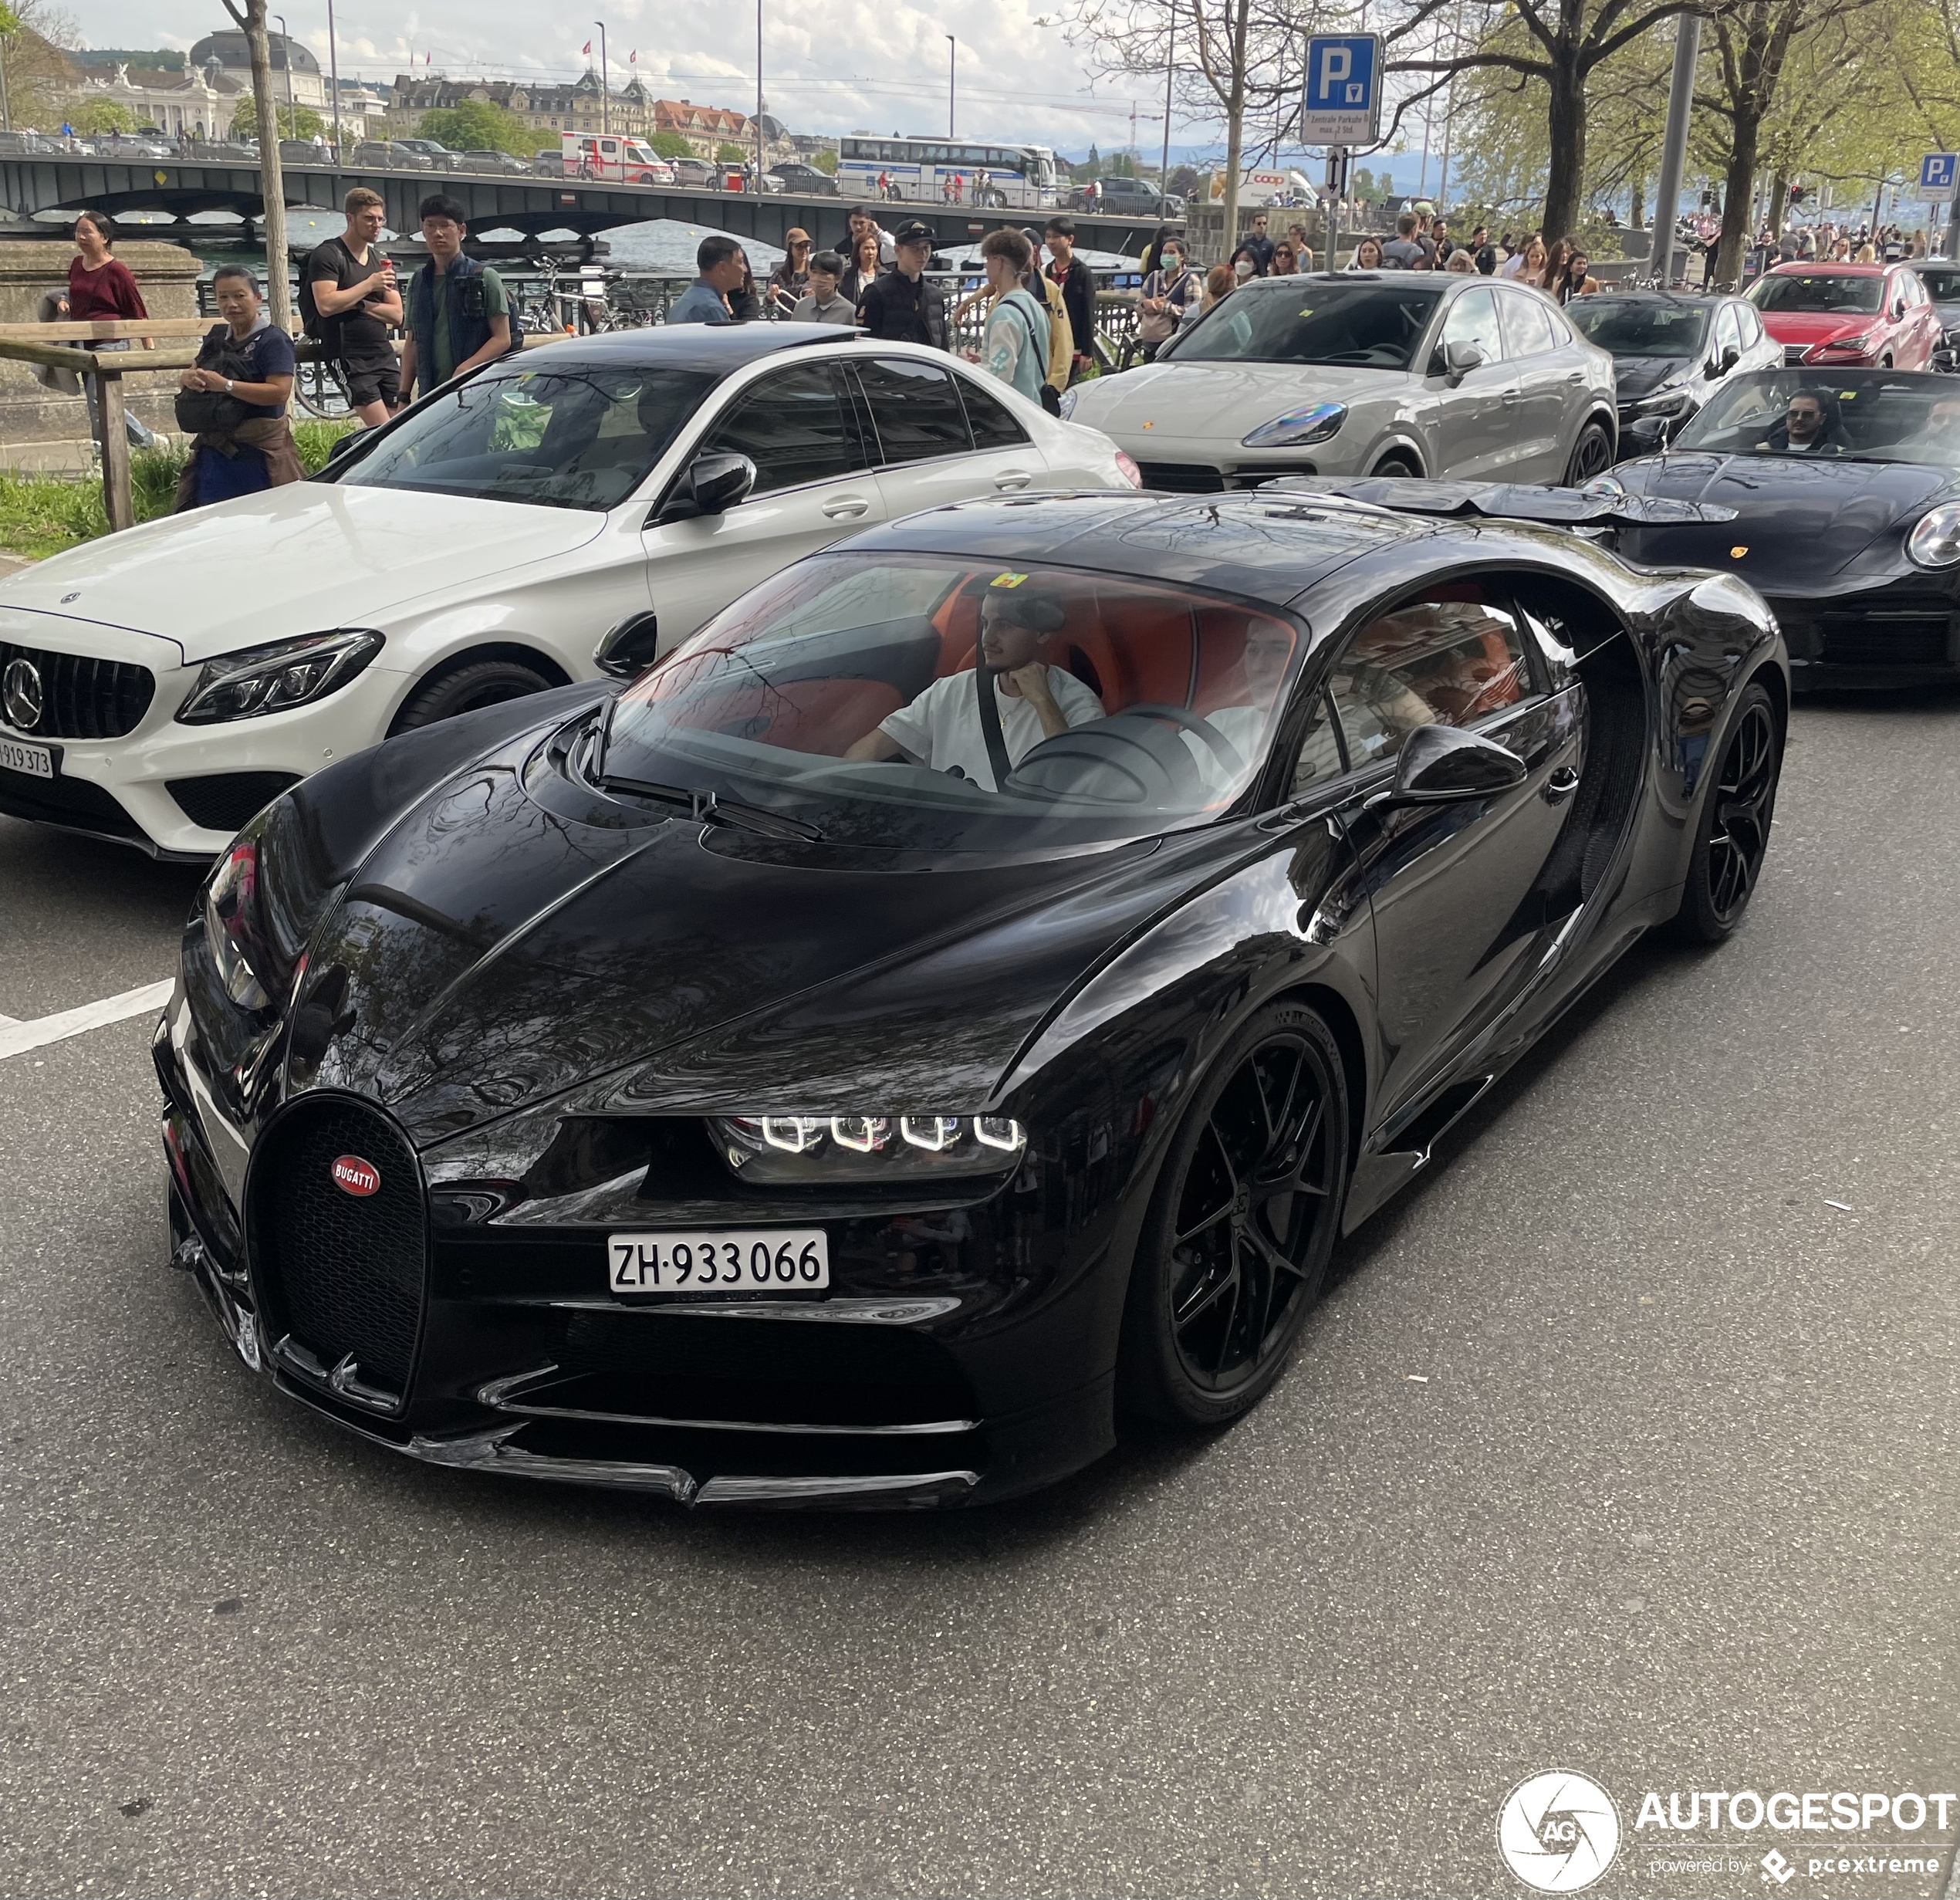 Zürich - The Bugatti City